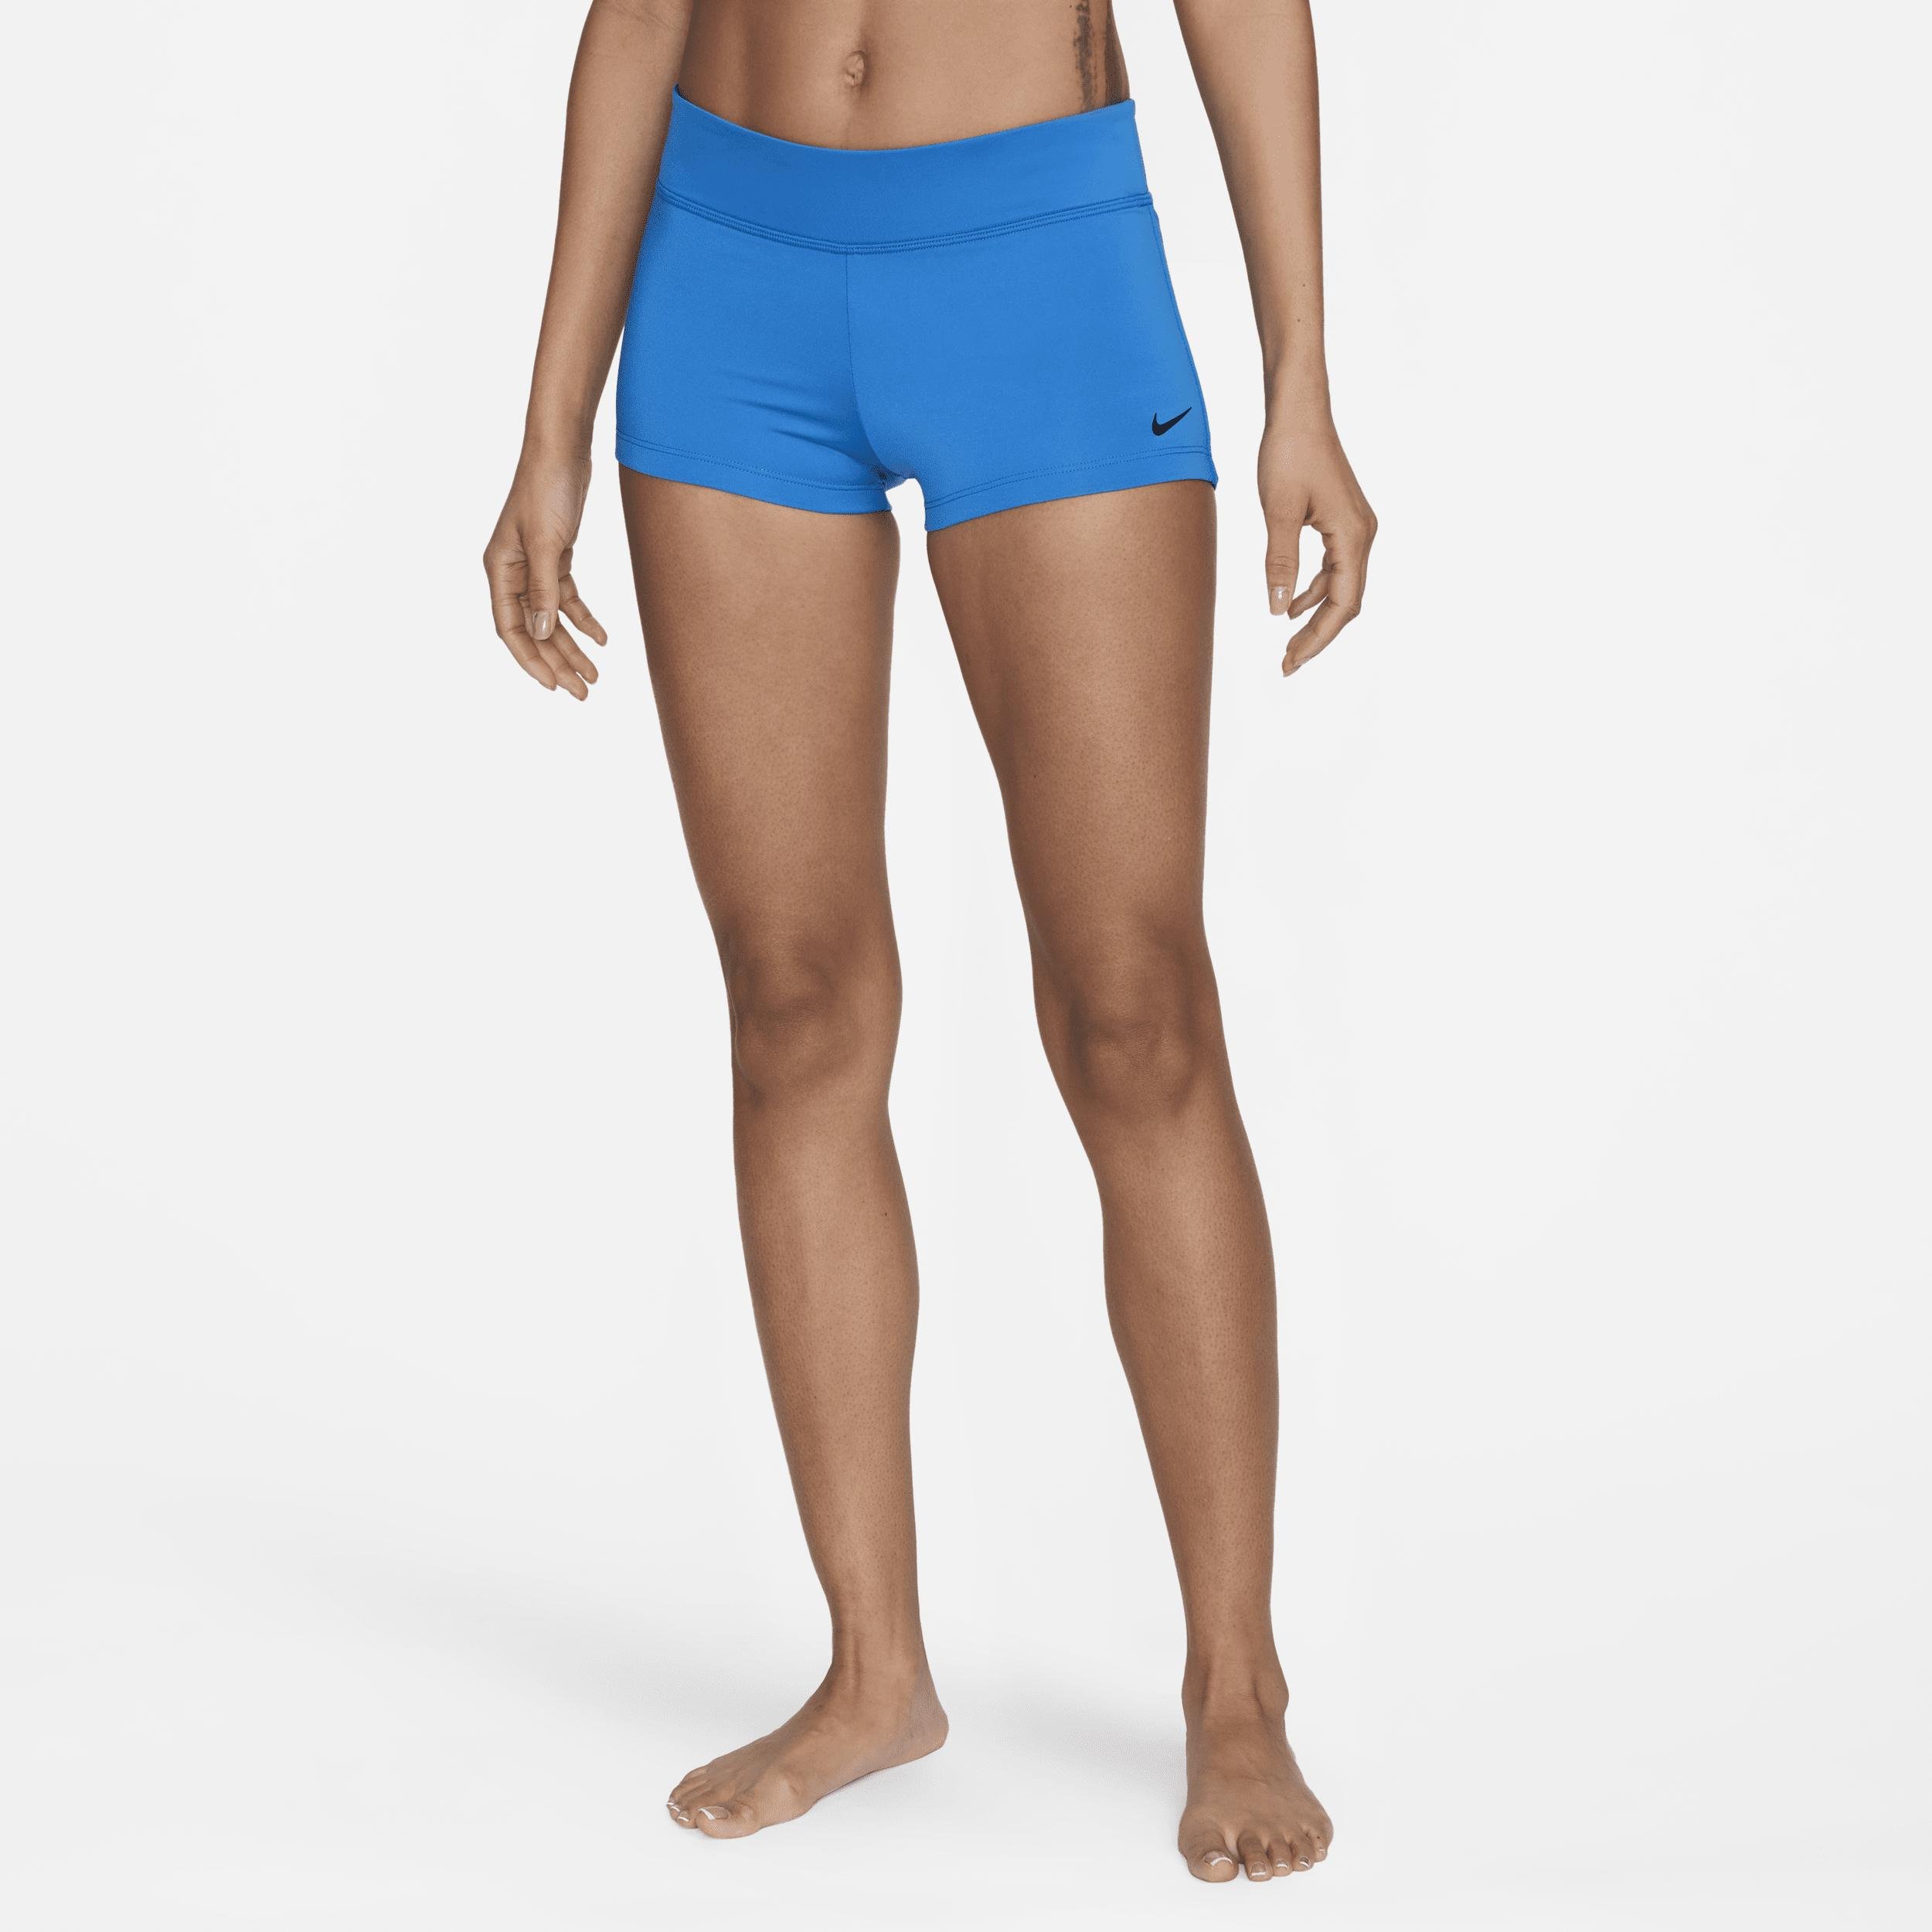 Nike Women's Swim Essential Kick Shorts by NIKE